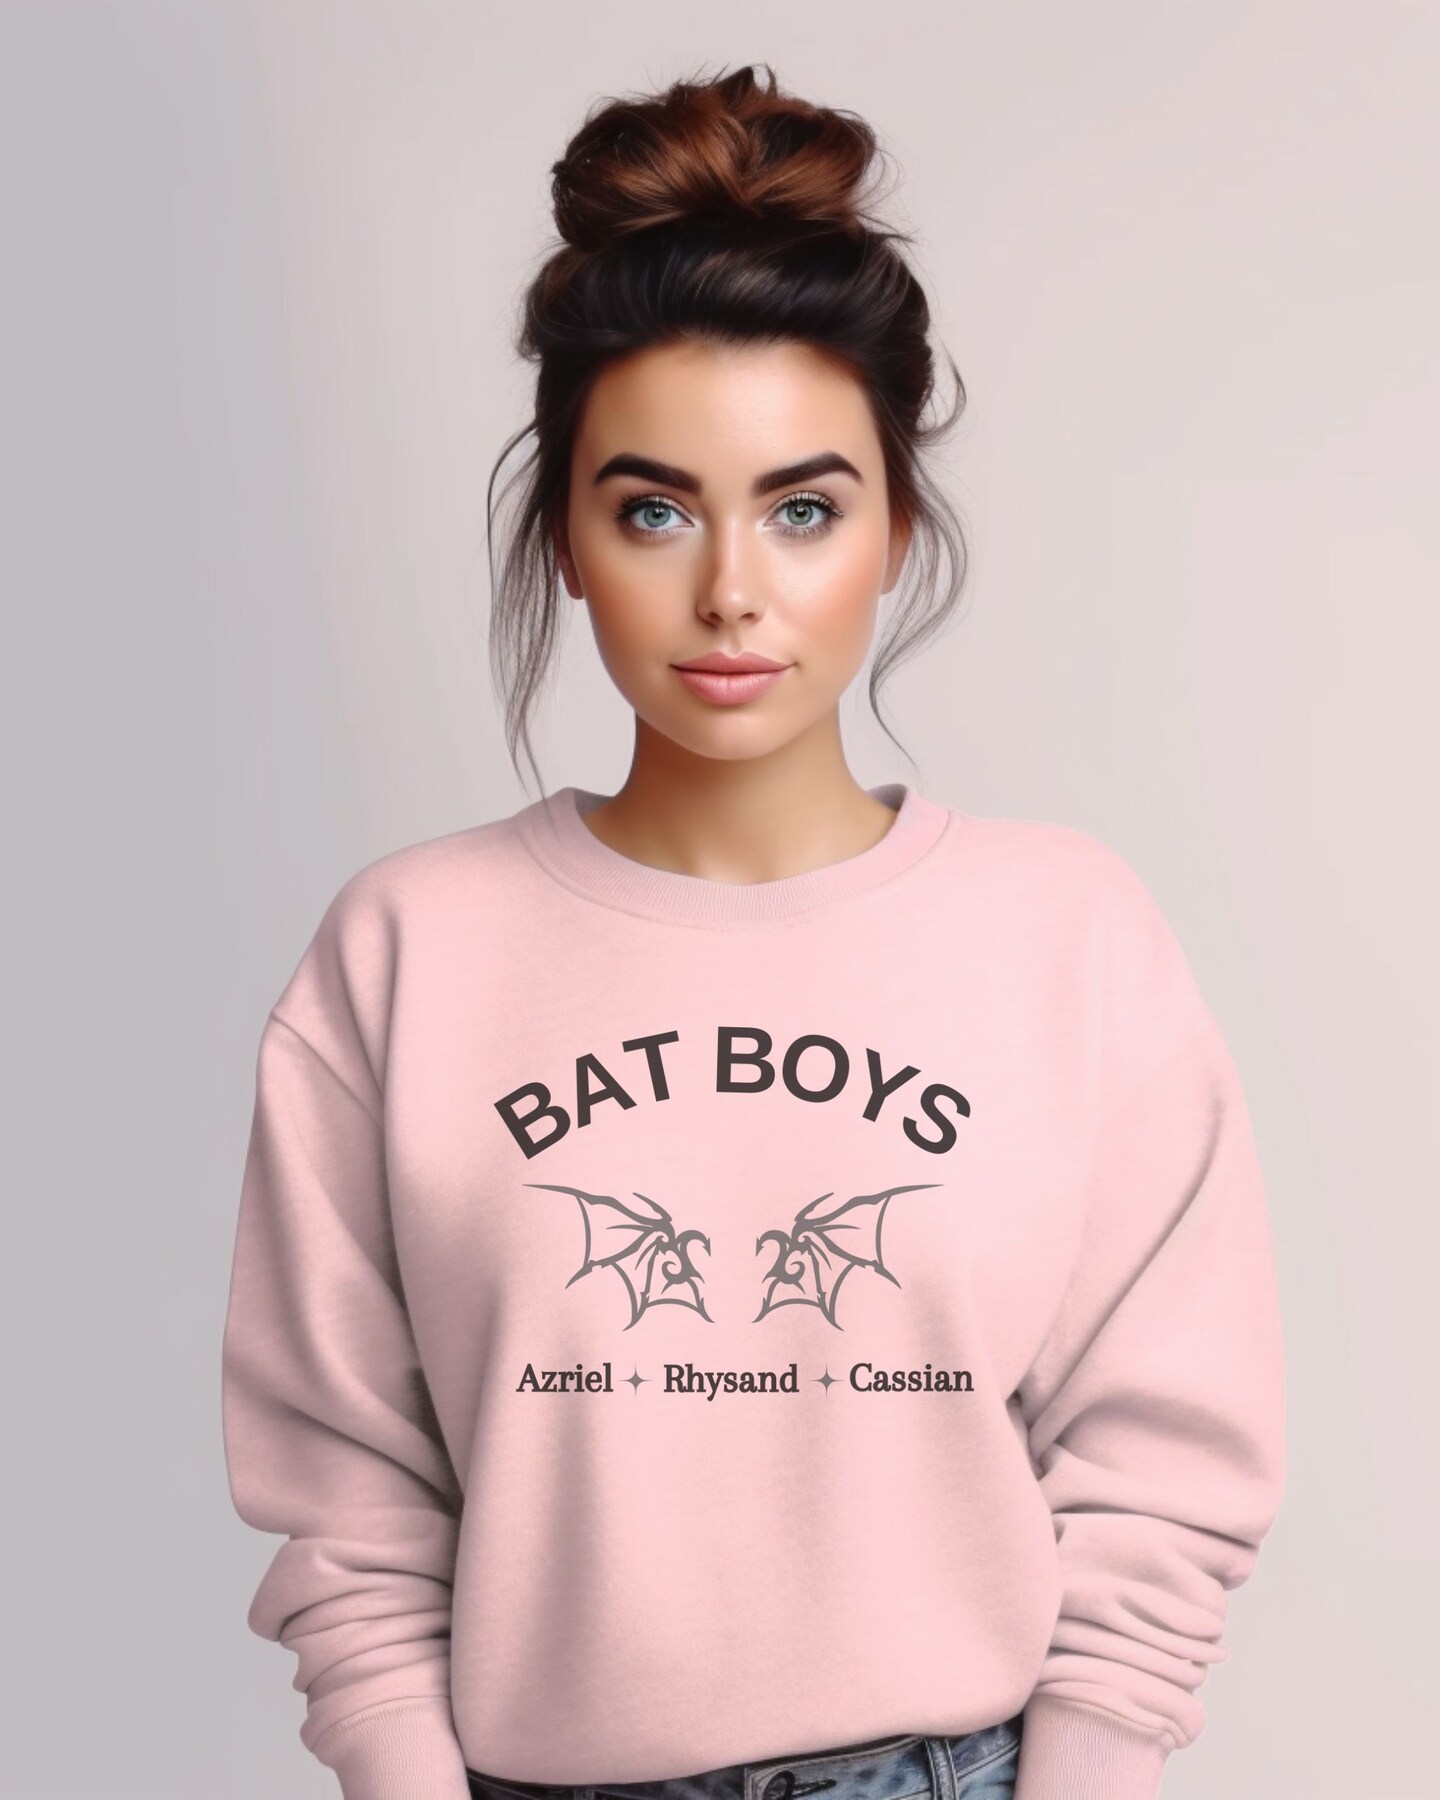 ACOTAR Bat Boys Sweatshirt, Bat Boys Sweater, The Bat Boys of Illyria ...